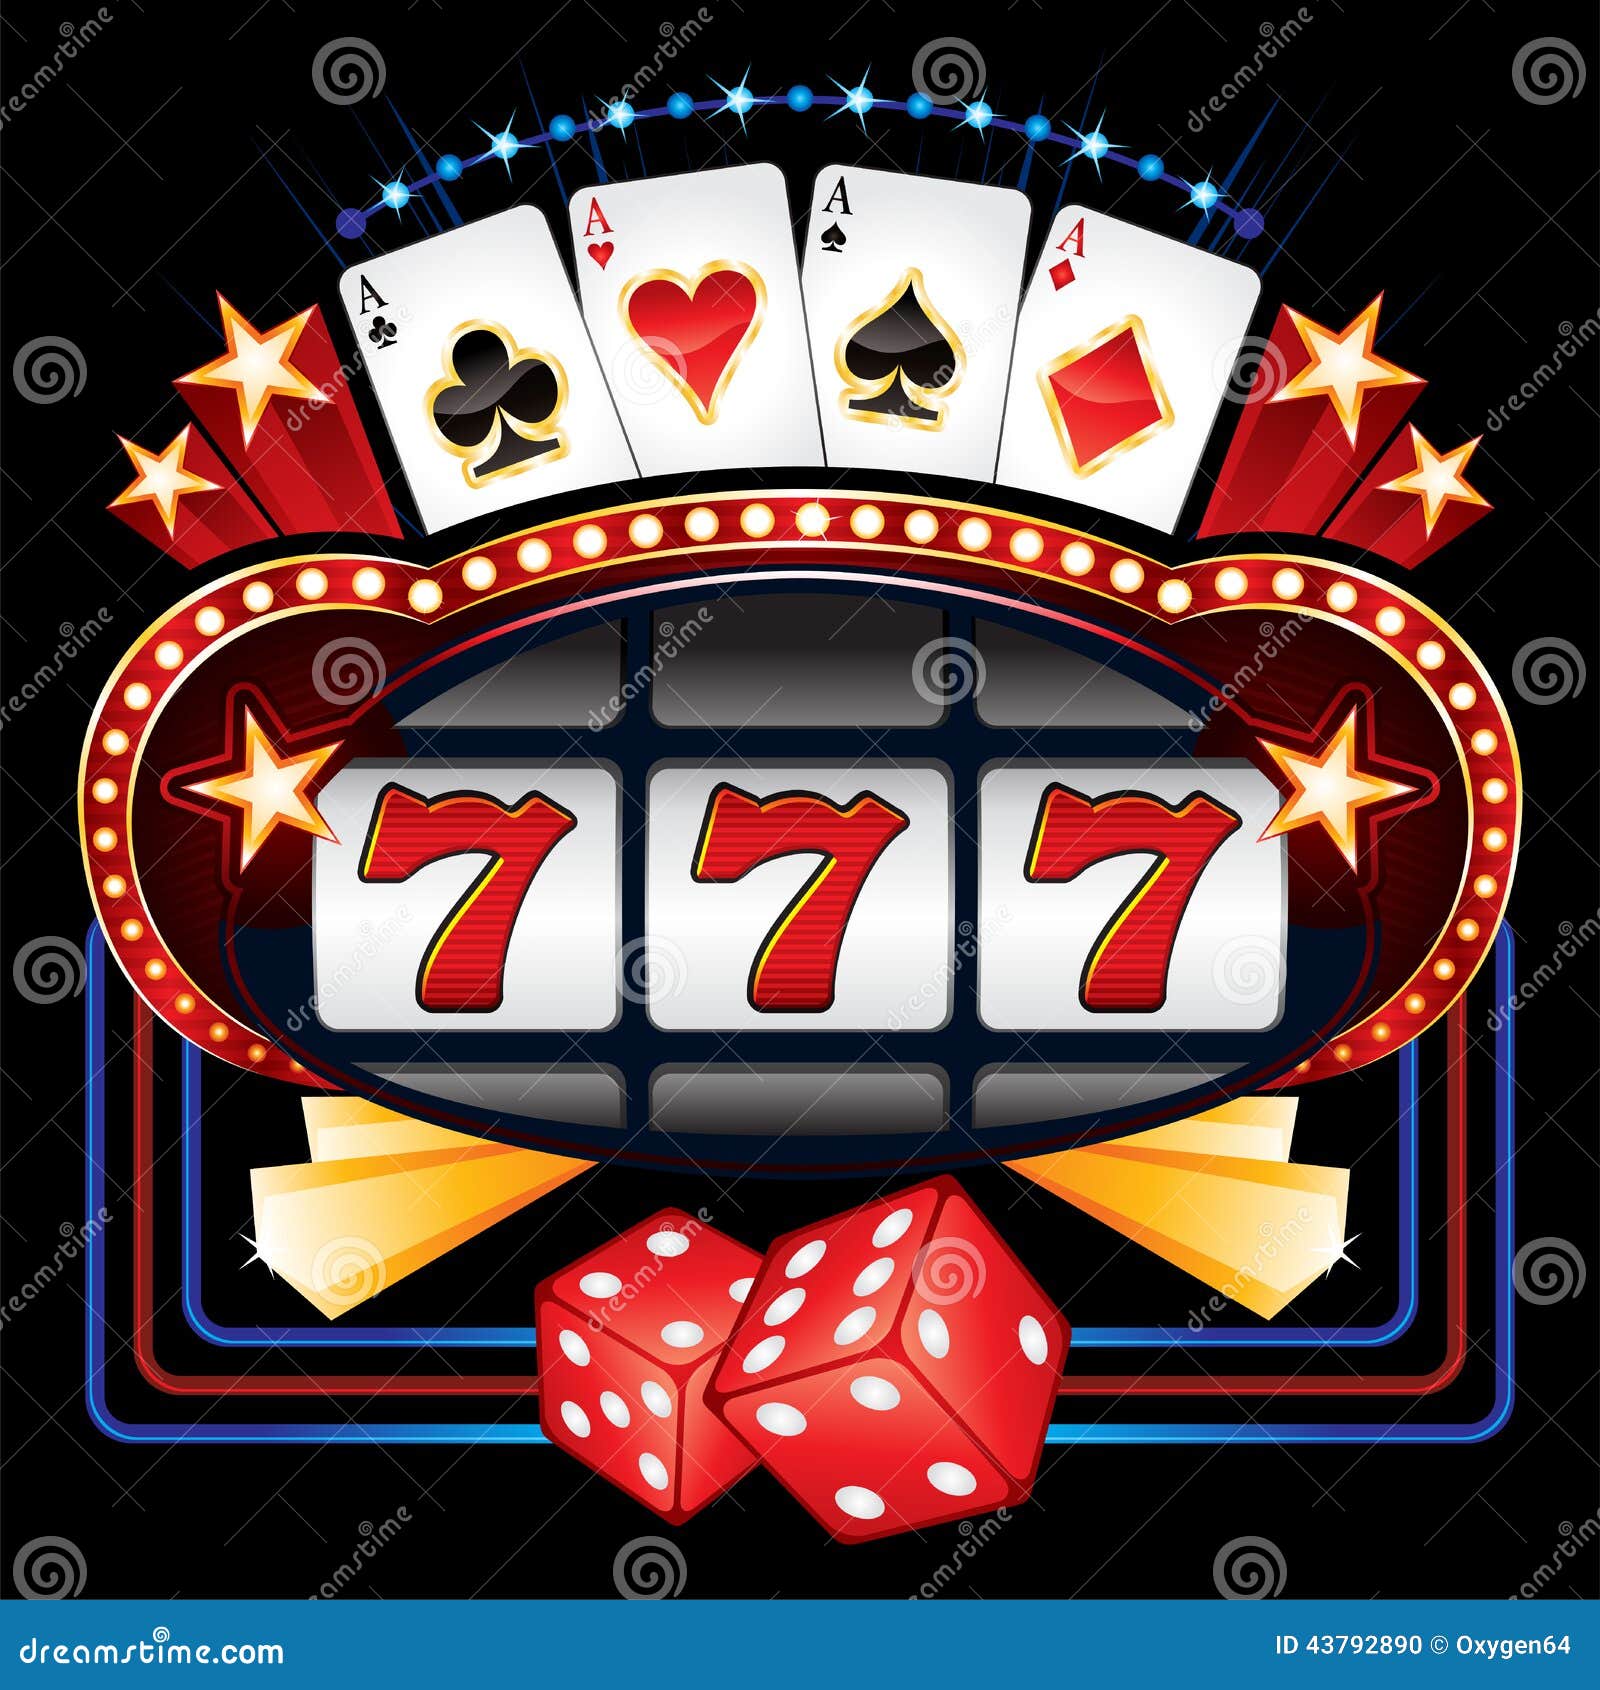 Planet 7 casino new no deposit bonus codes